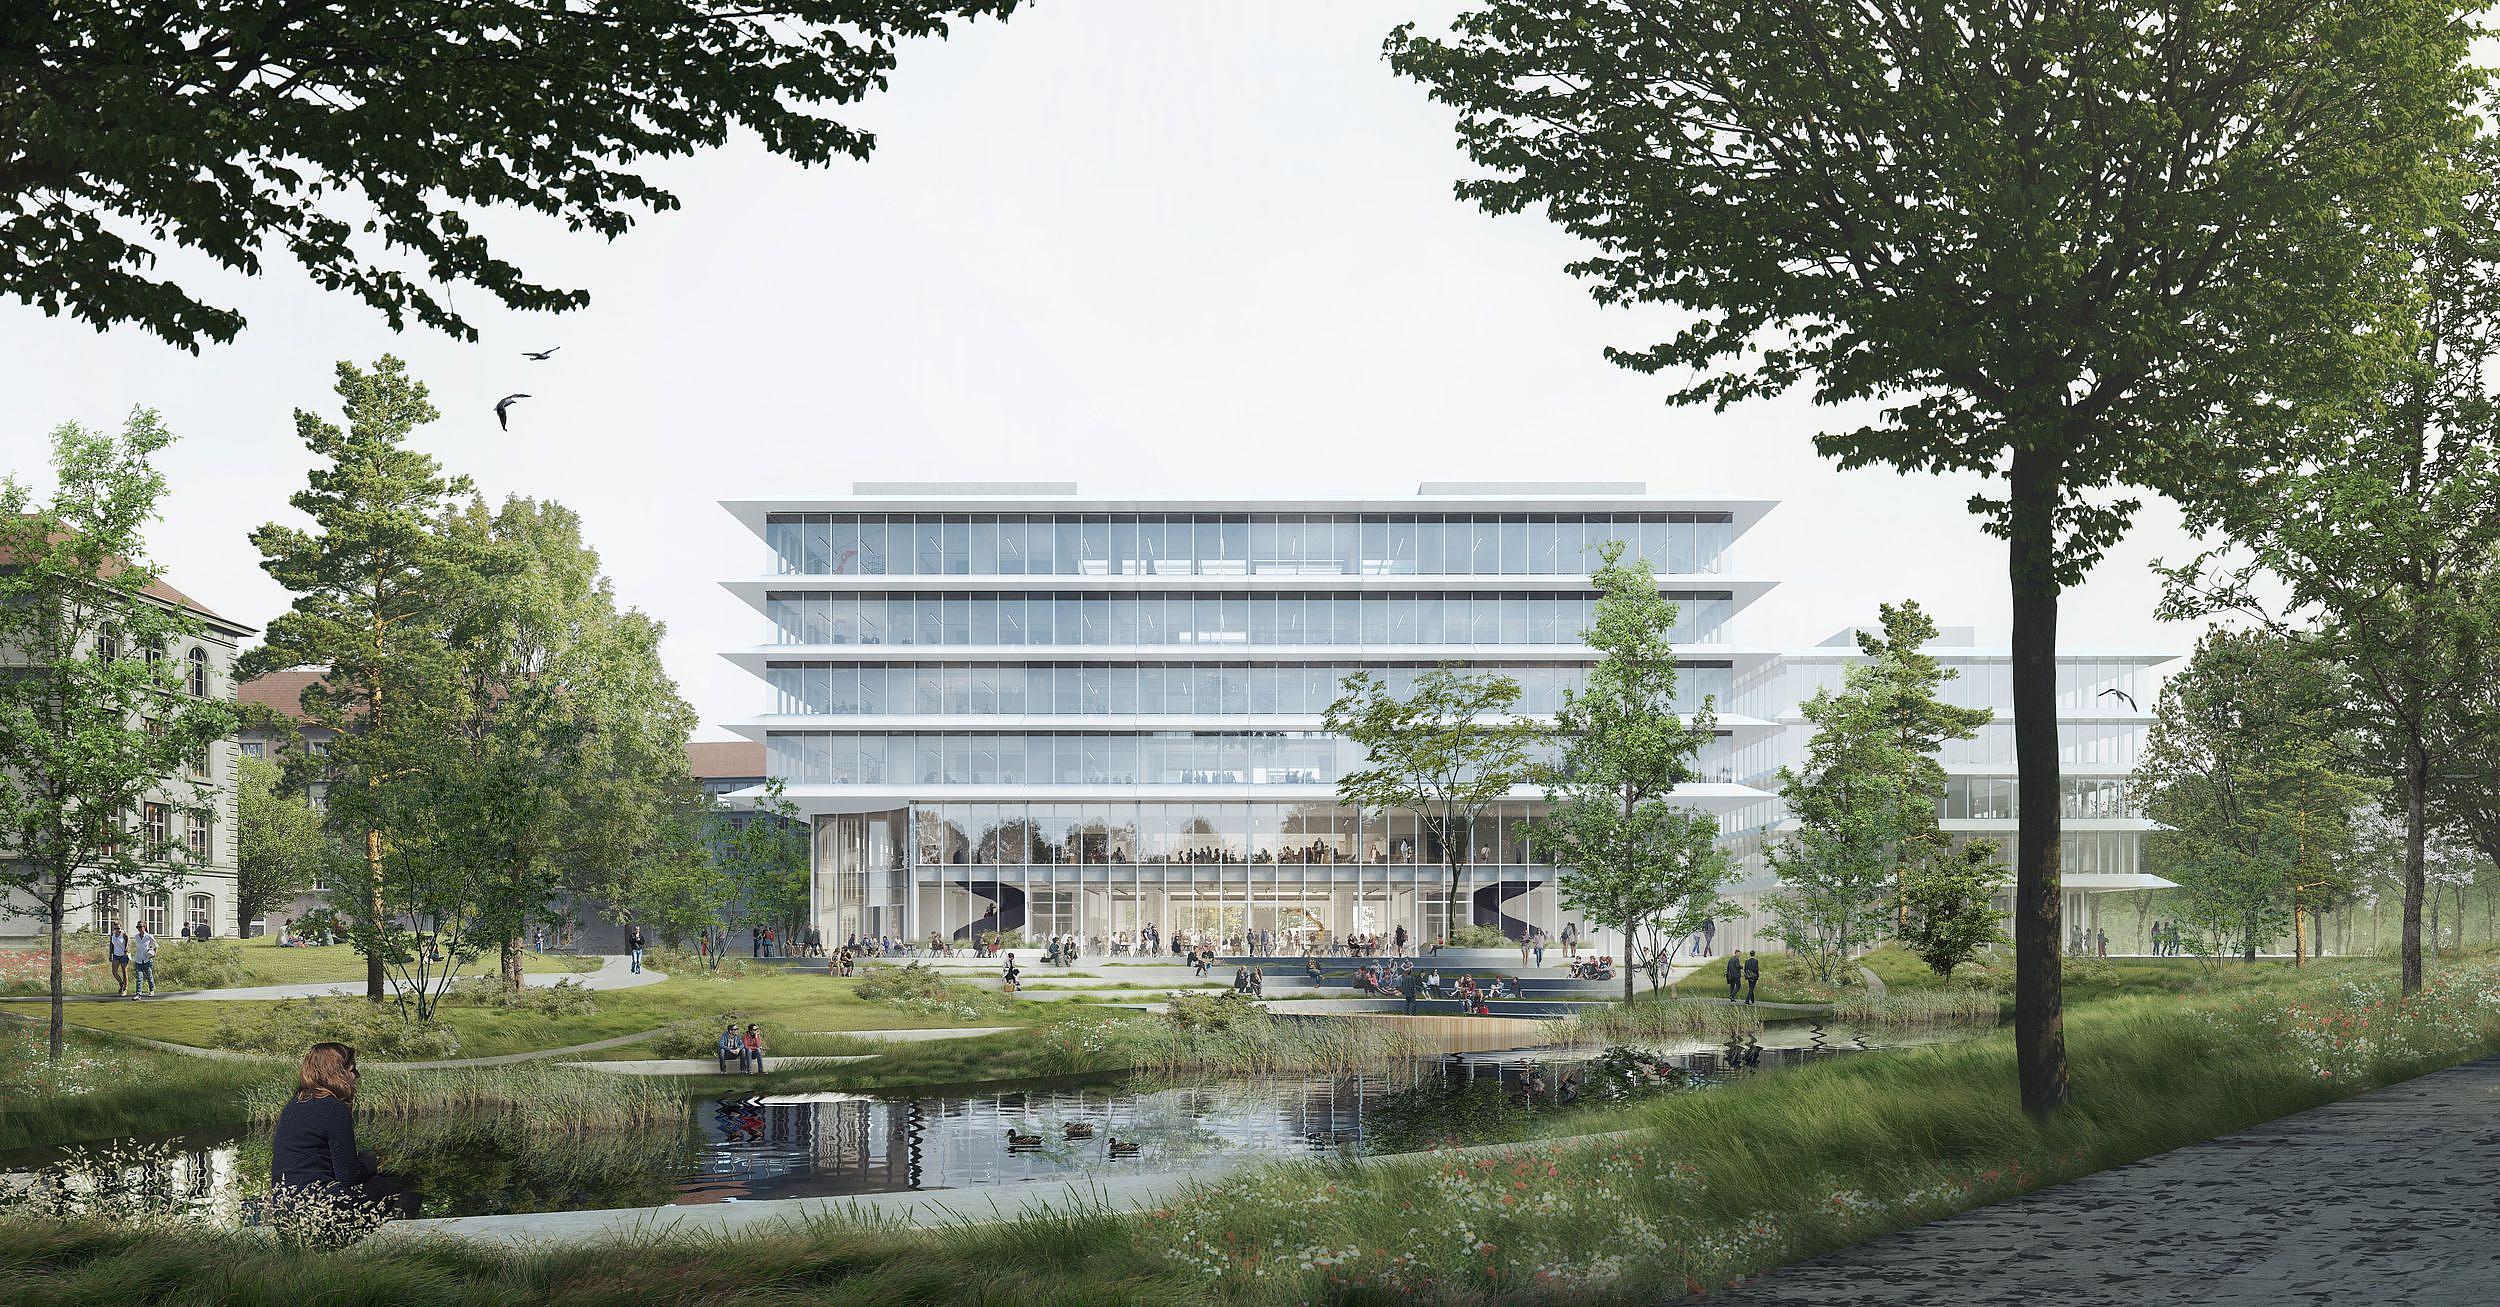 ZHAW Campus Winterthur - Projects - C.F. Møller